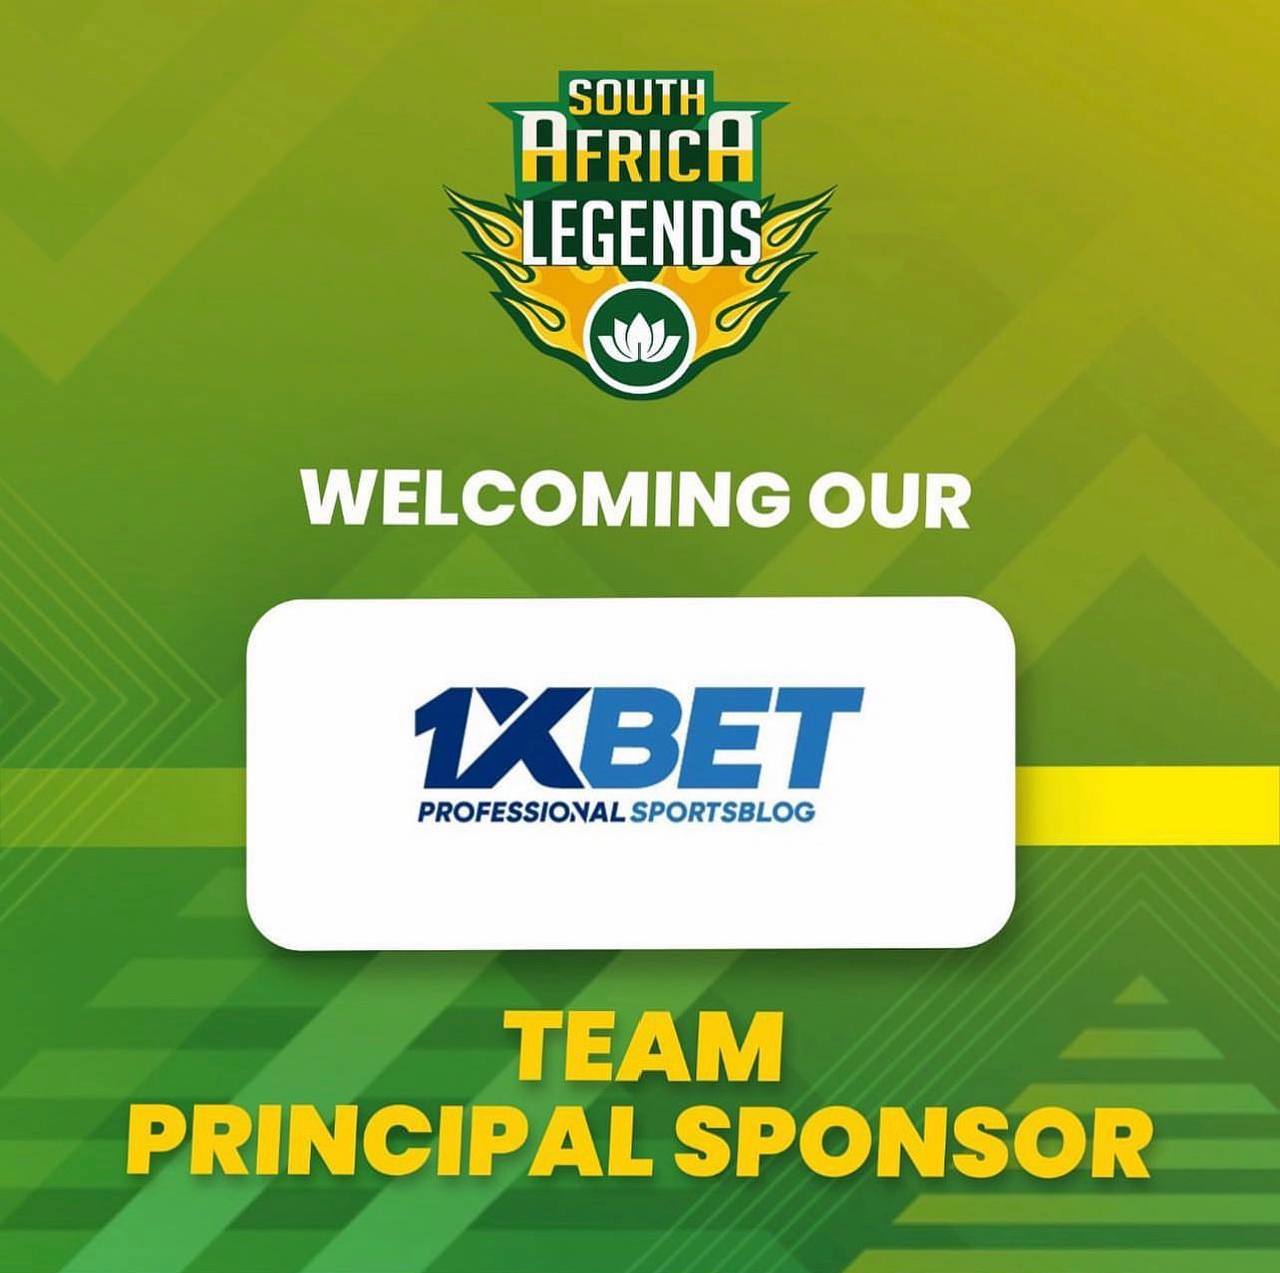 1xBet Sportsblog became a principal sponsor of South Africa Legends